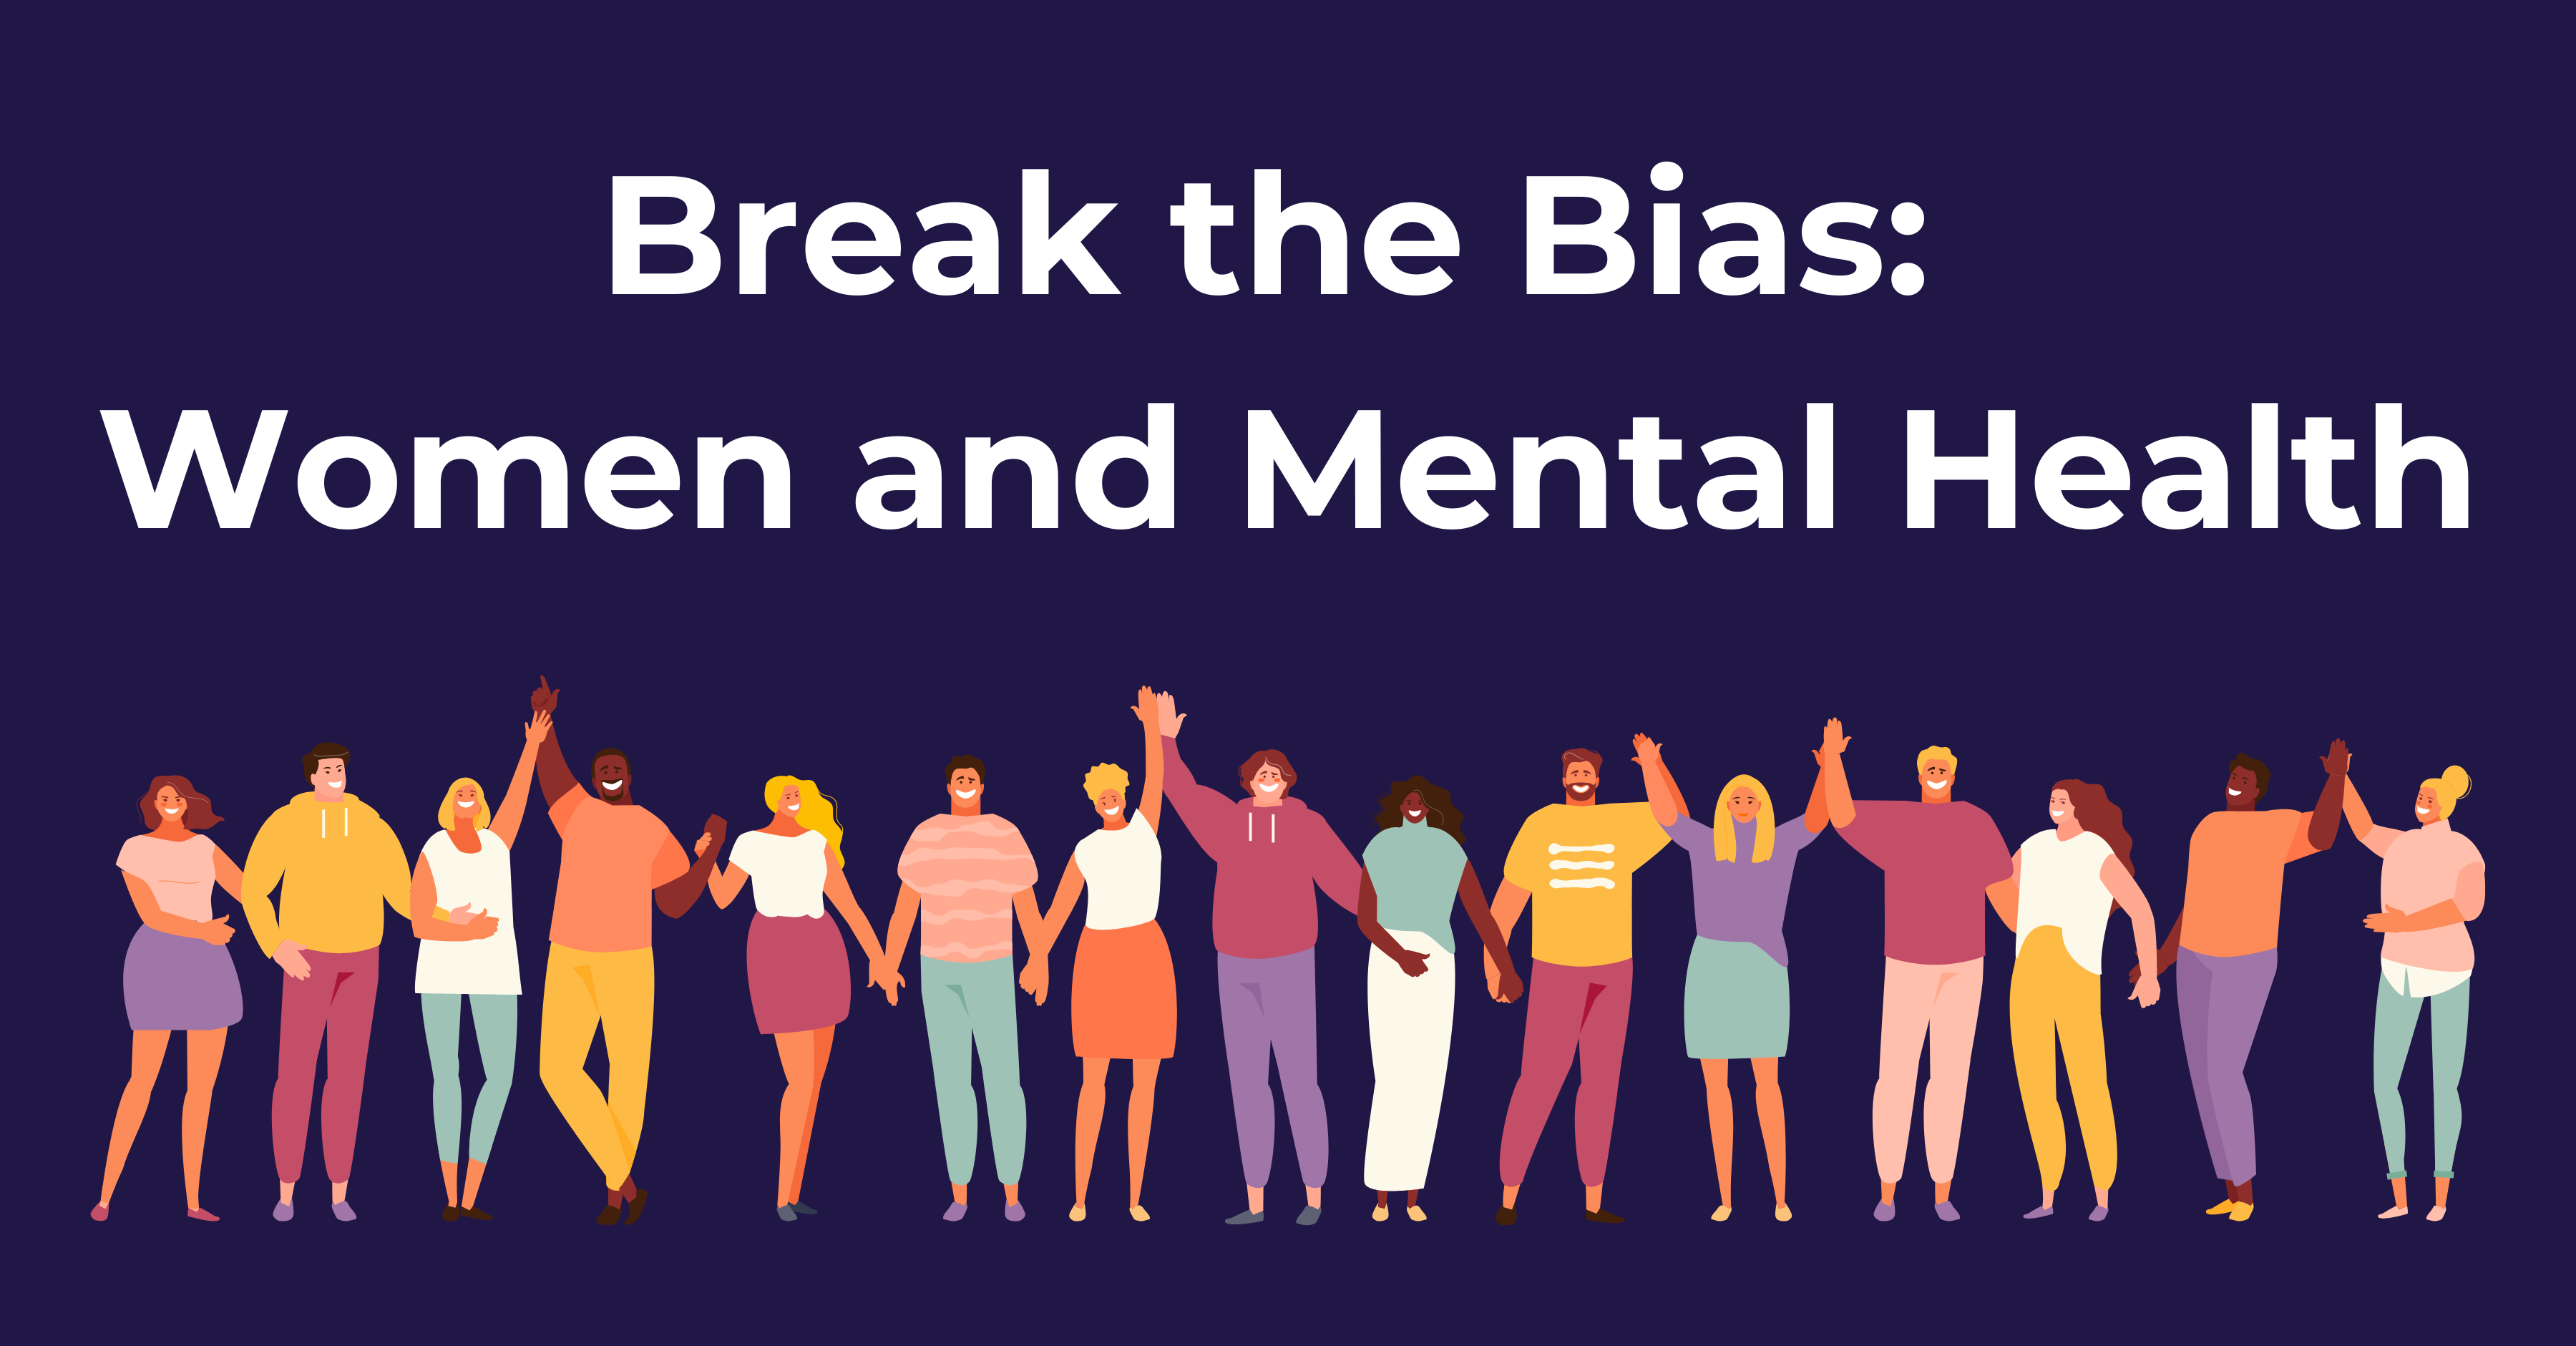 Break the Bias: Women and Mental Health